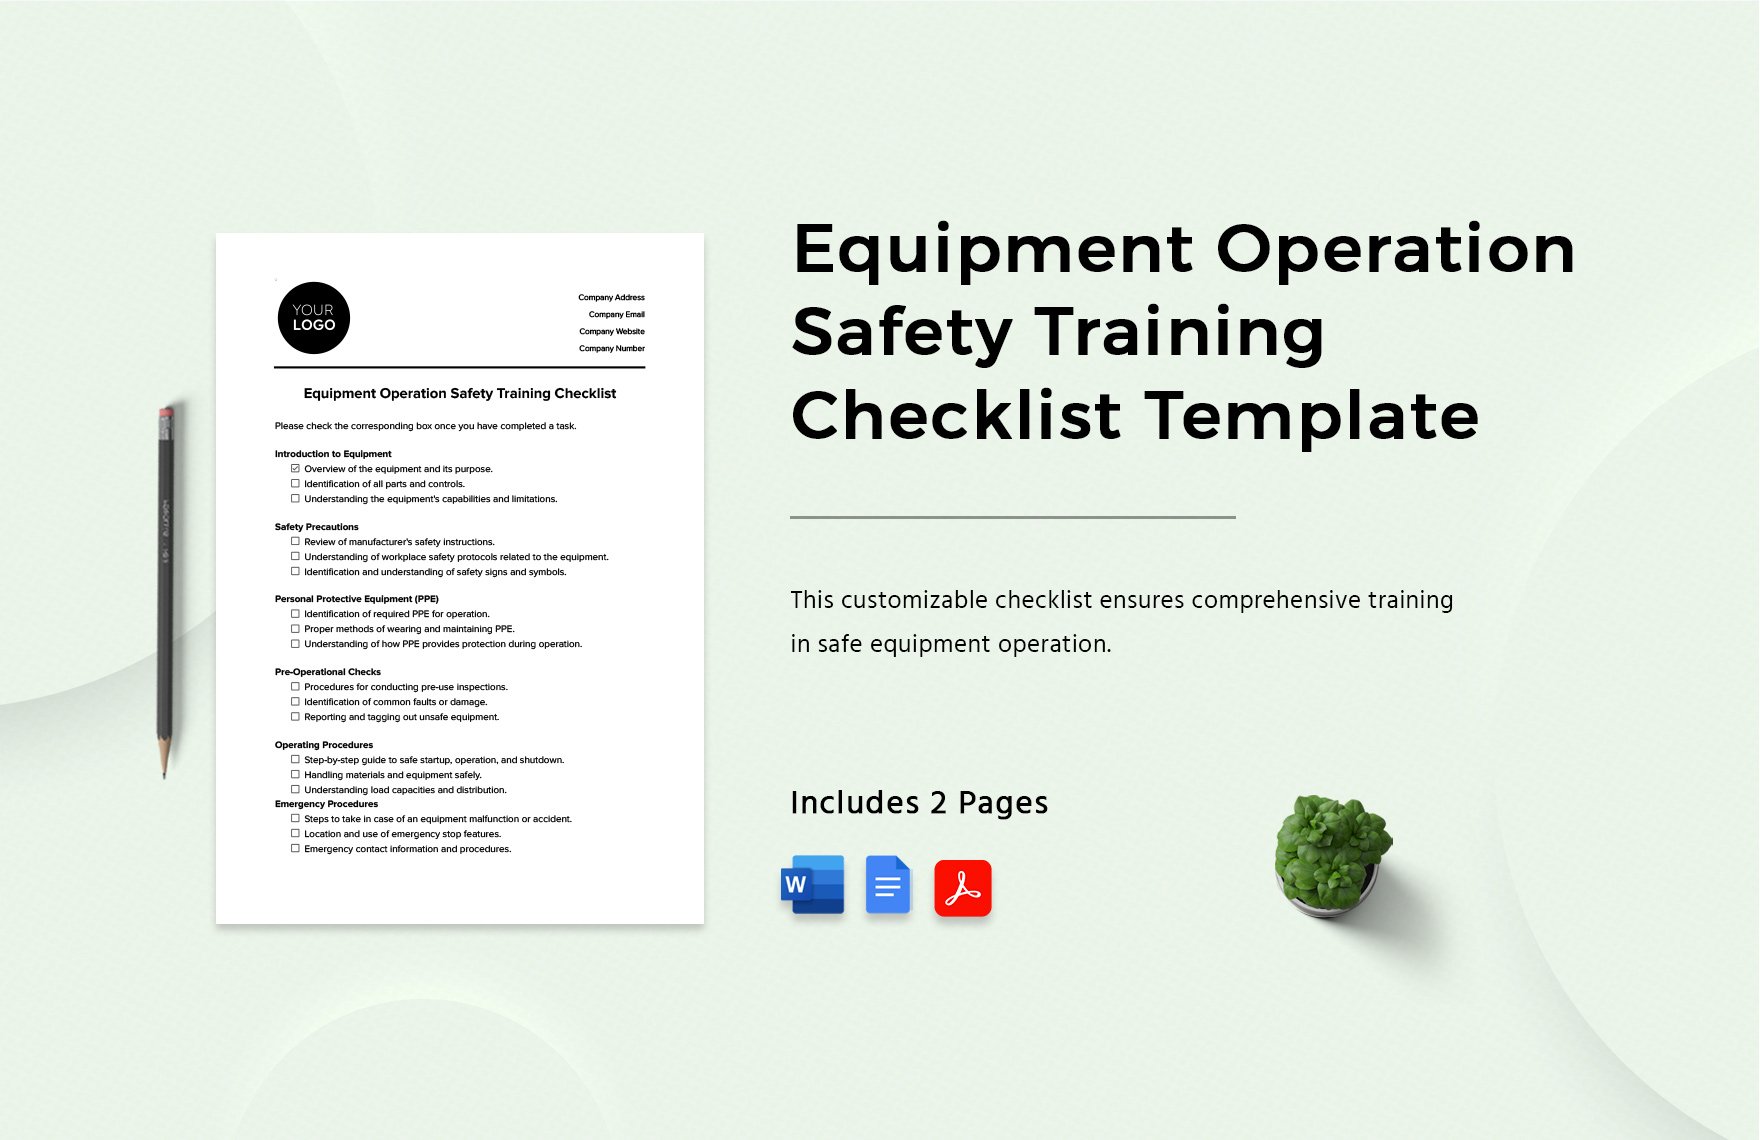 Equipment Operation Safety Training Checklist Template